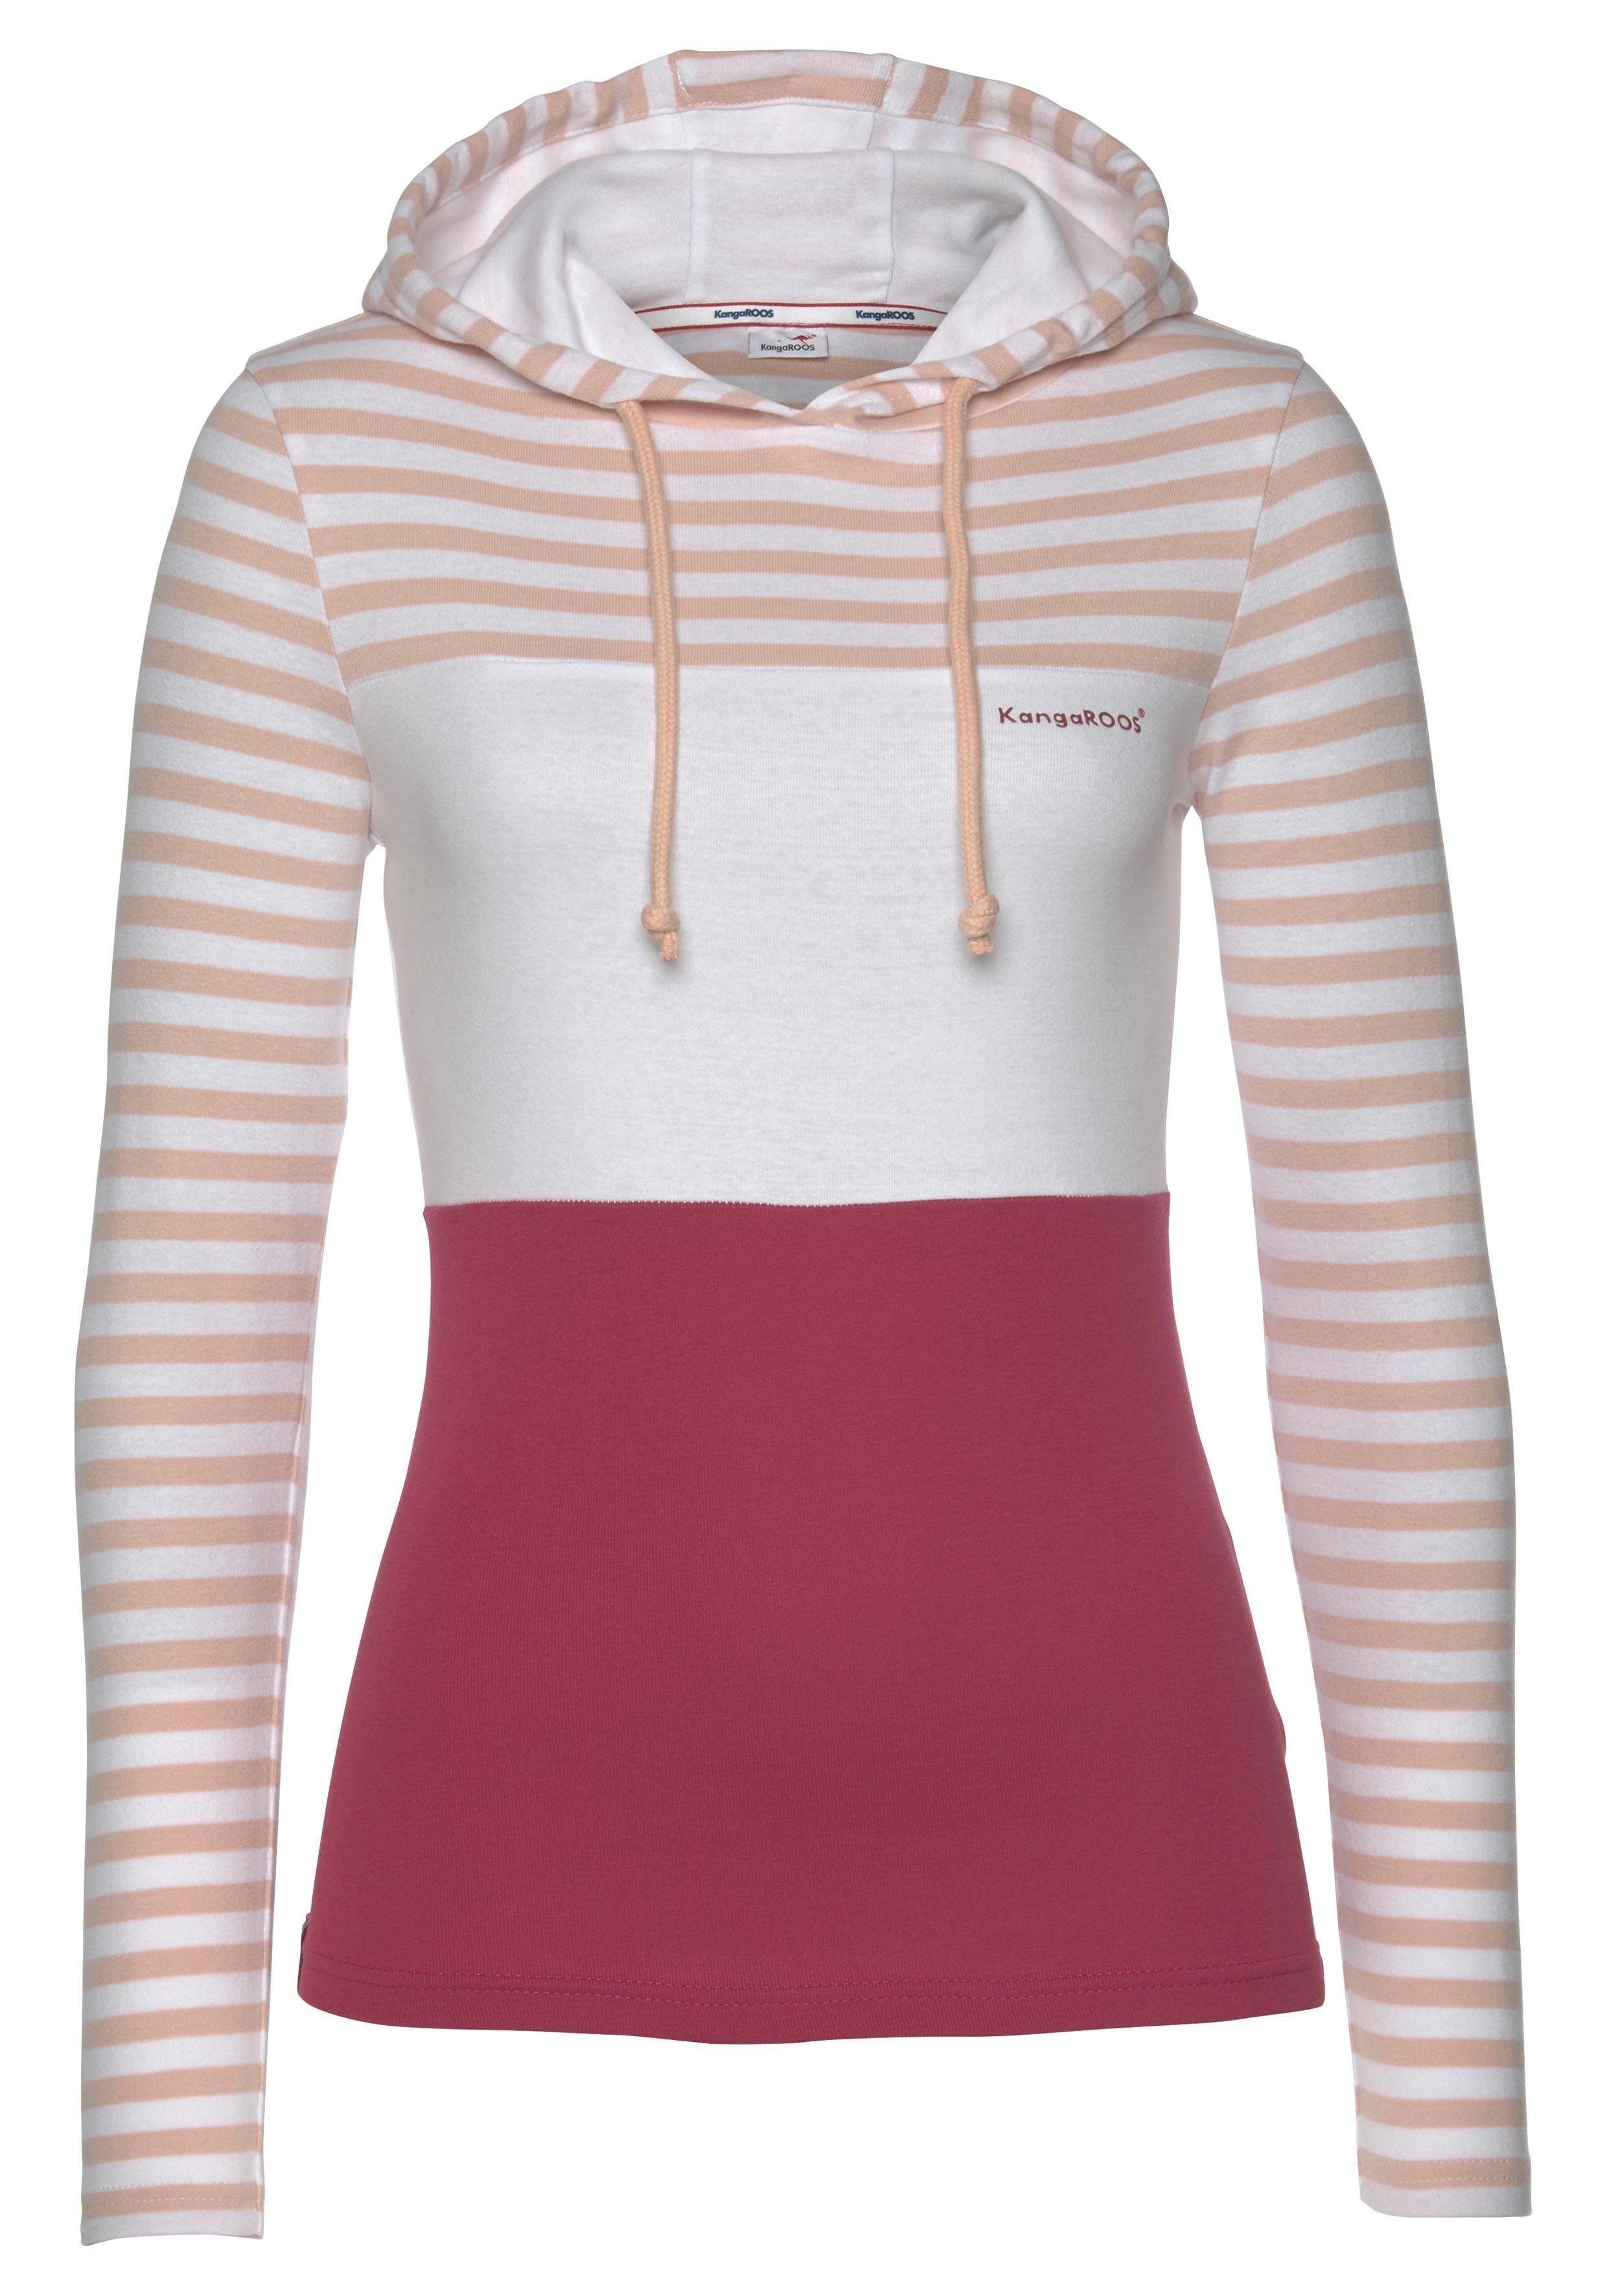 Design KangaROOS in verspielter rosa-weiß-bordeaux mit Kapuzenshirt Ringel-Optik Colorblocking